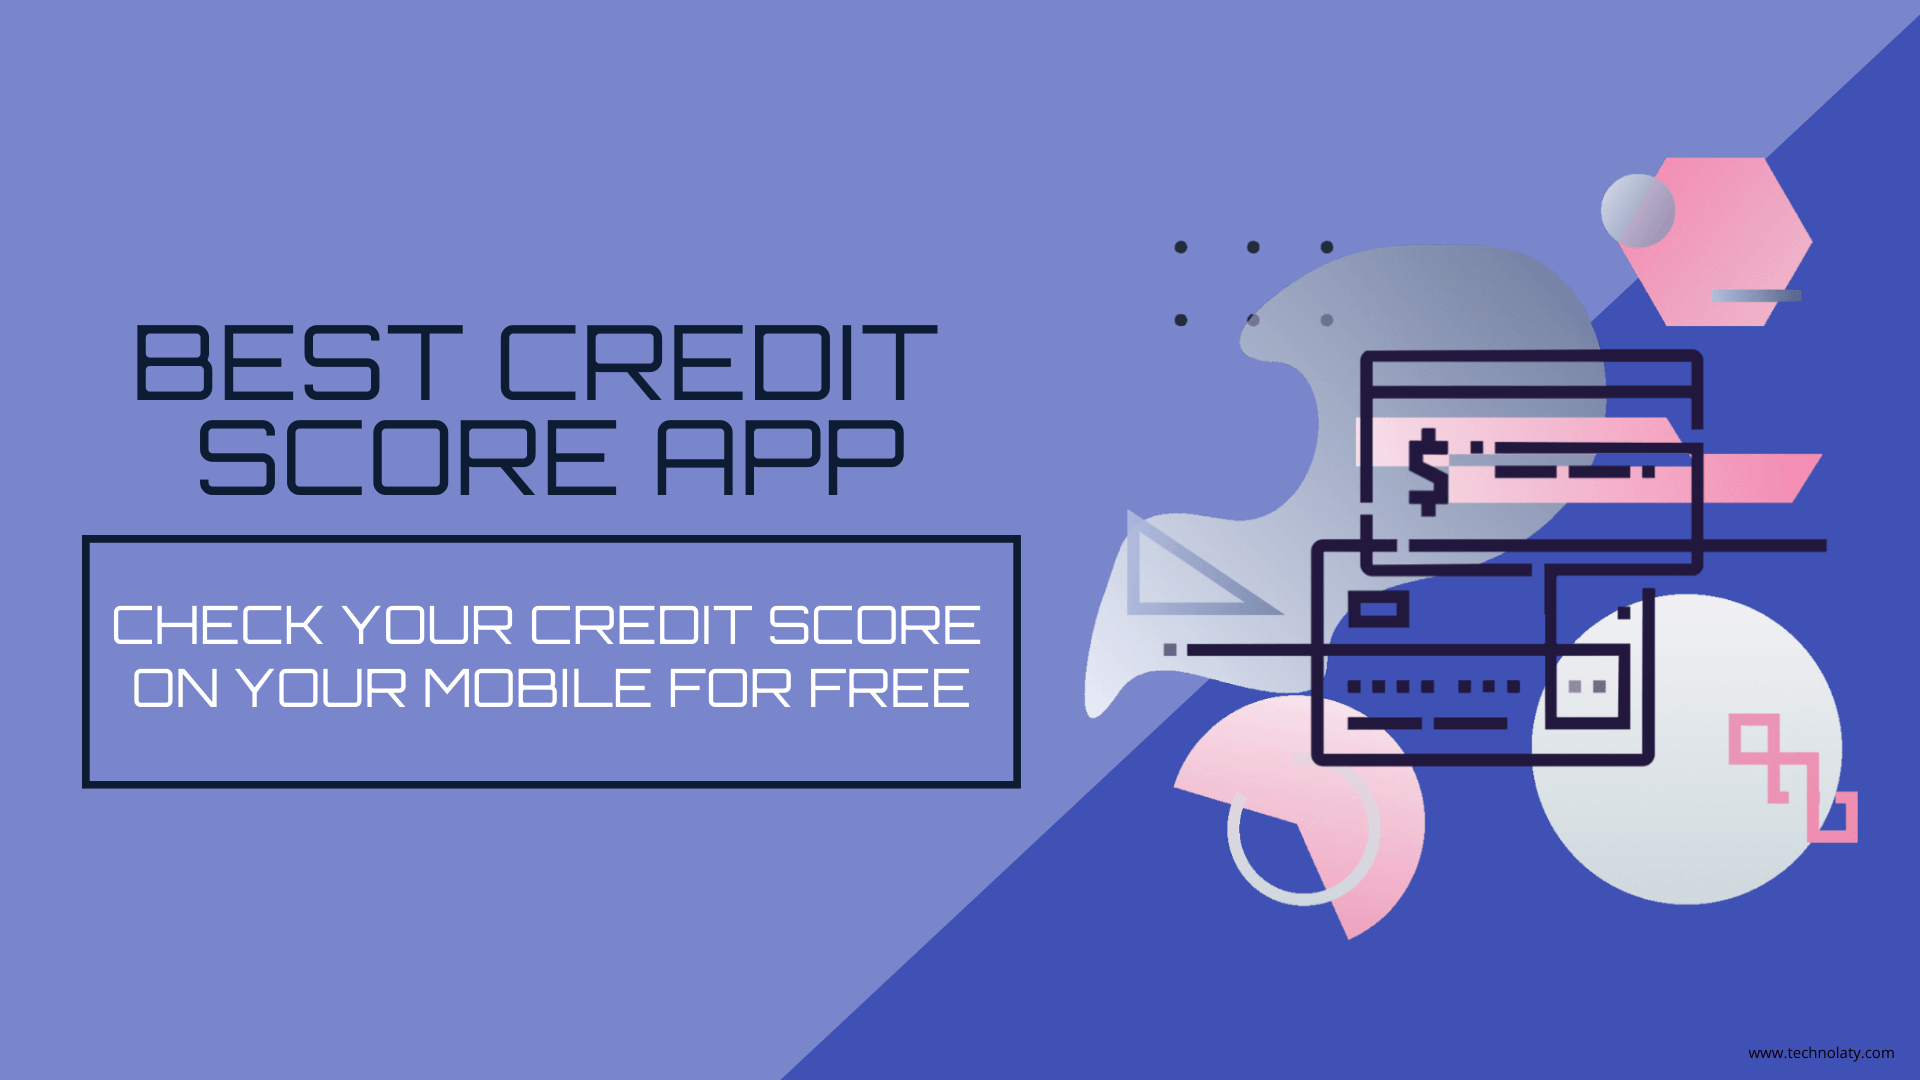 Best credit score app for mobile